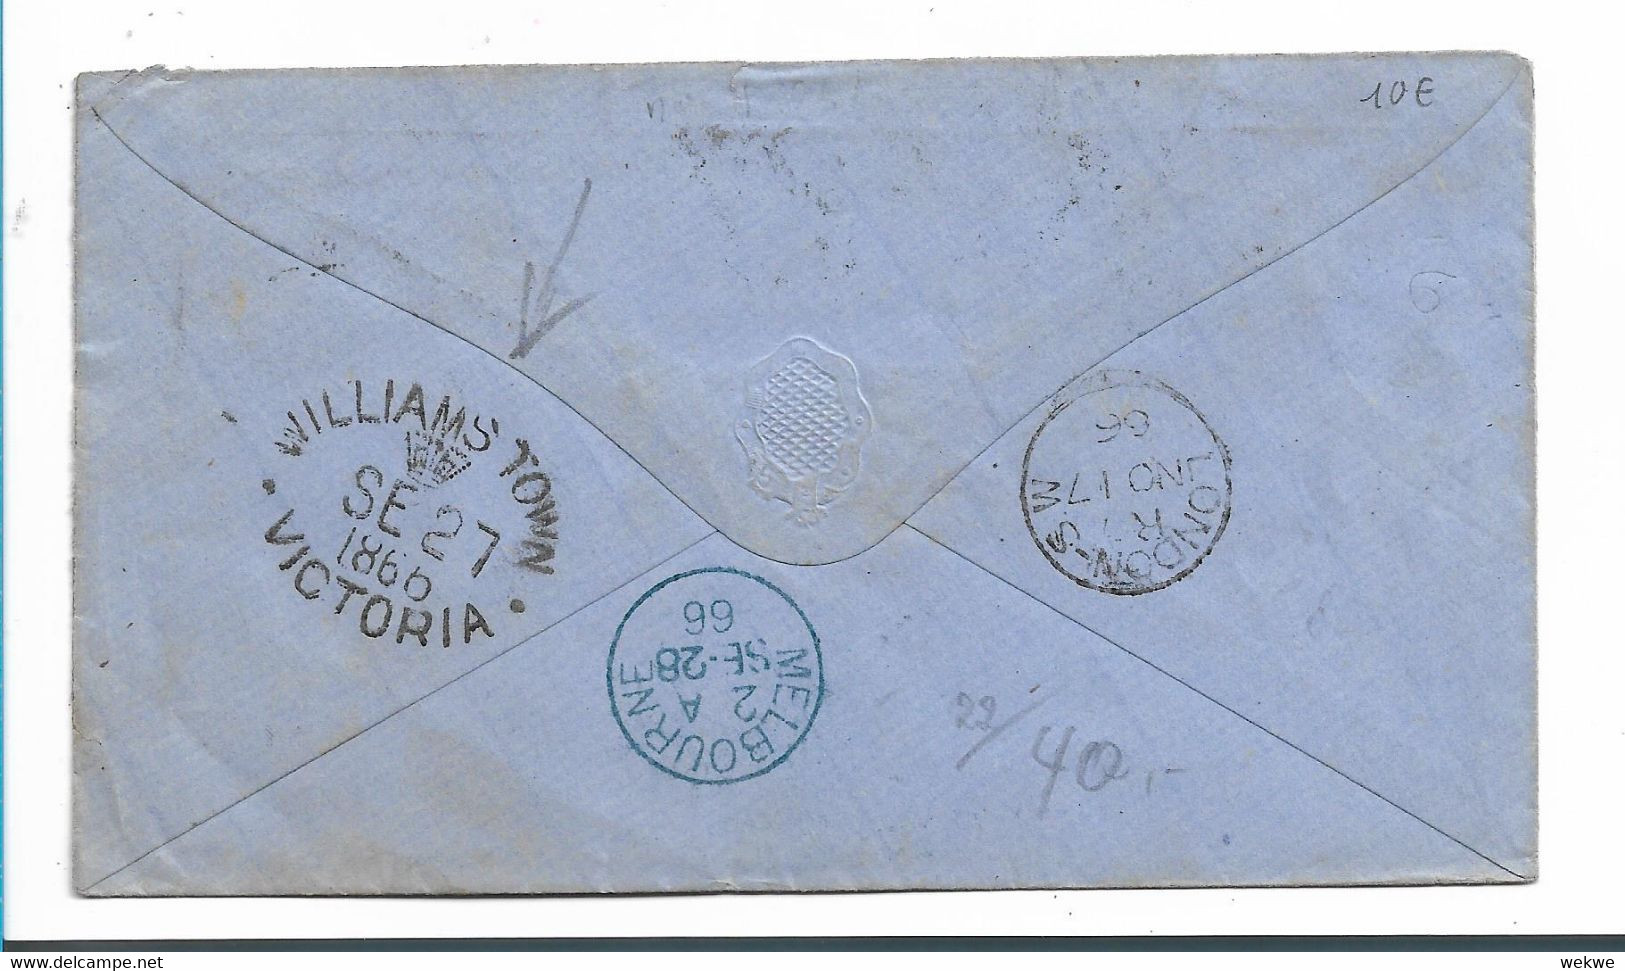 Vic175 / AUSTRALIEN- VICTORIA  - 6 Pence Einzelfrankatur Williamstown Via Melbourne Nach London 1866 - Storia Postale